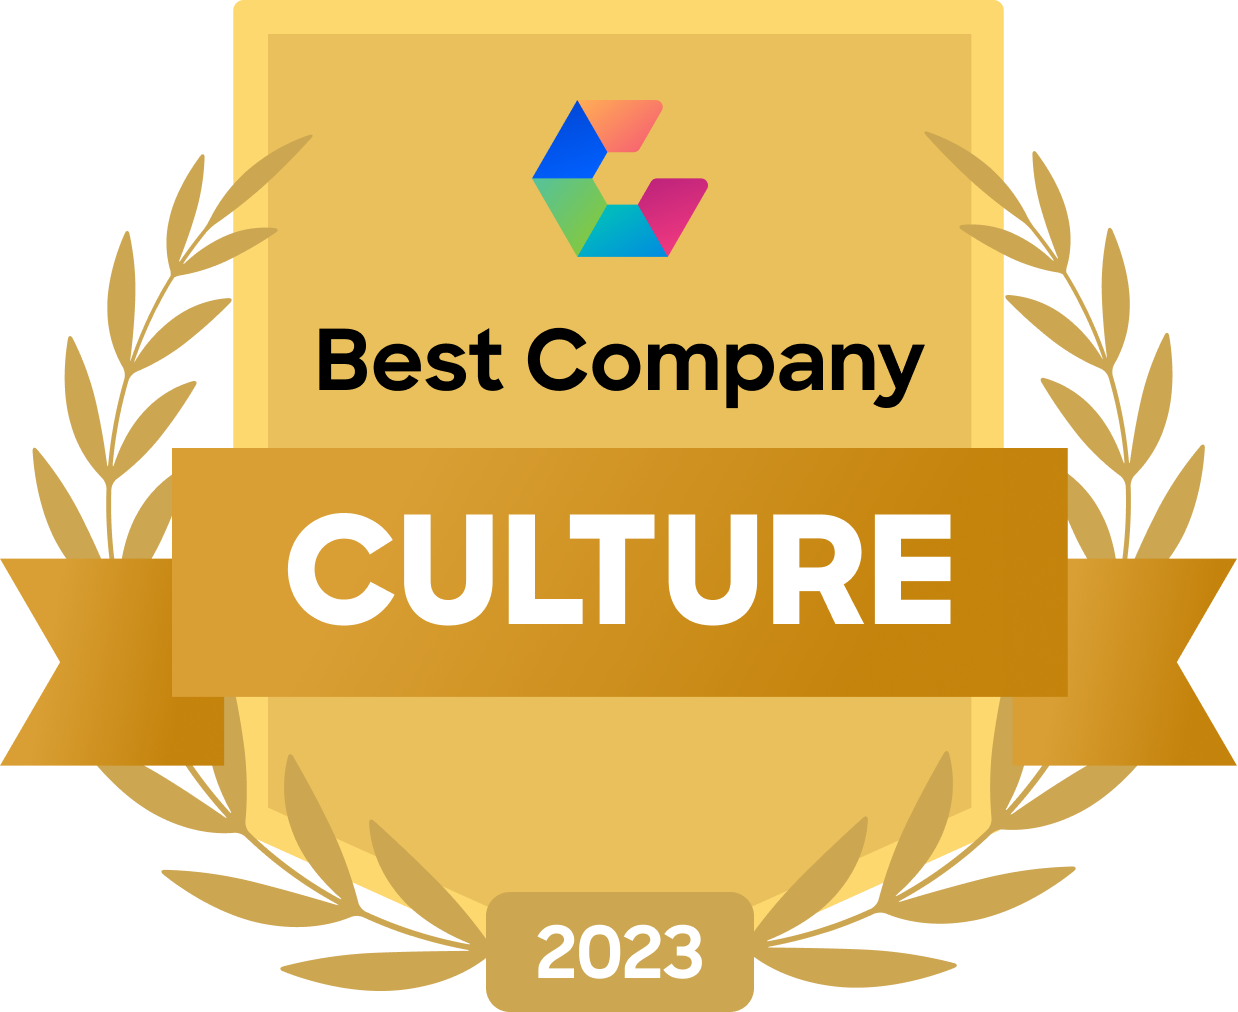 Best company culture award 2023